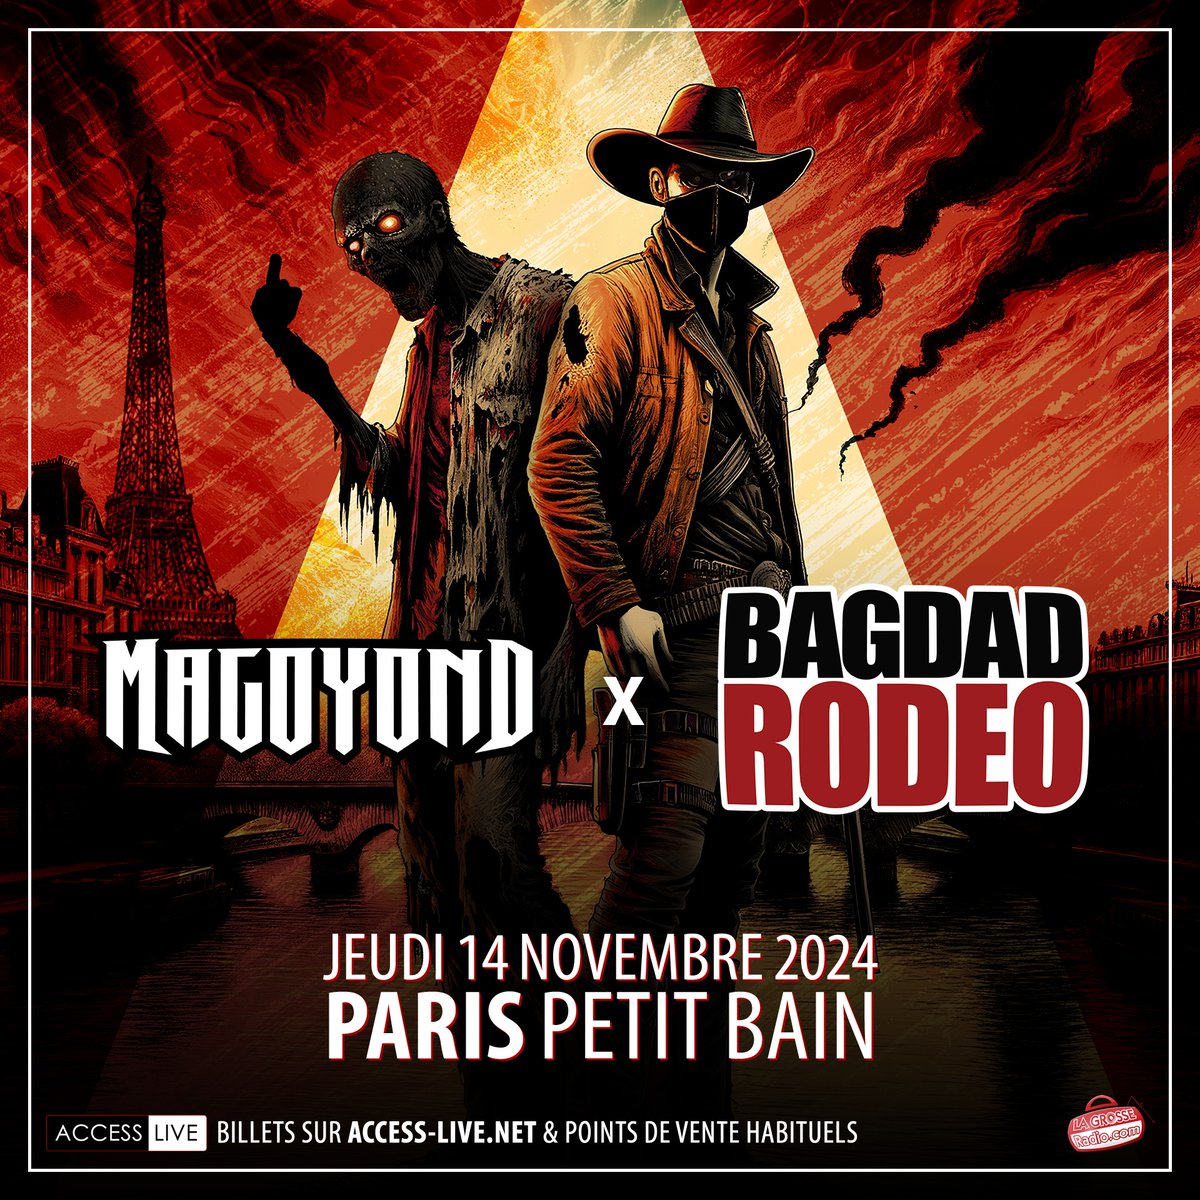 Billets Bagdad Rodeo - Magoyond (Petit Bain - Paris)